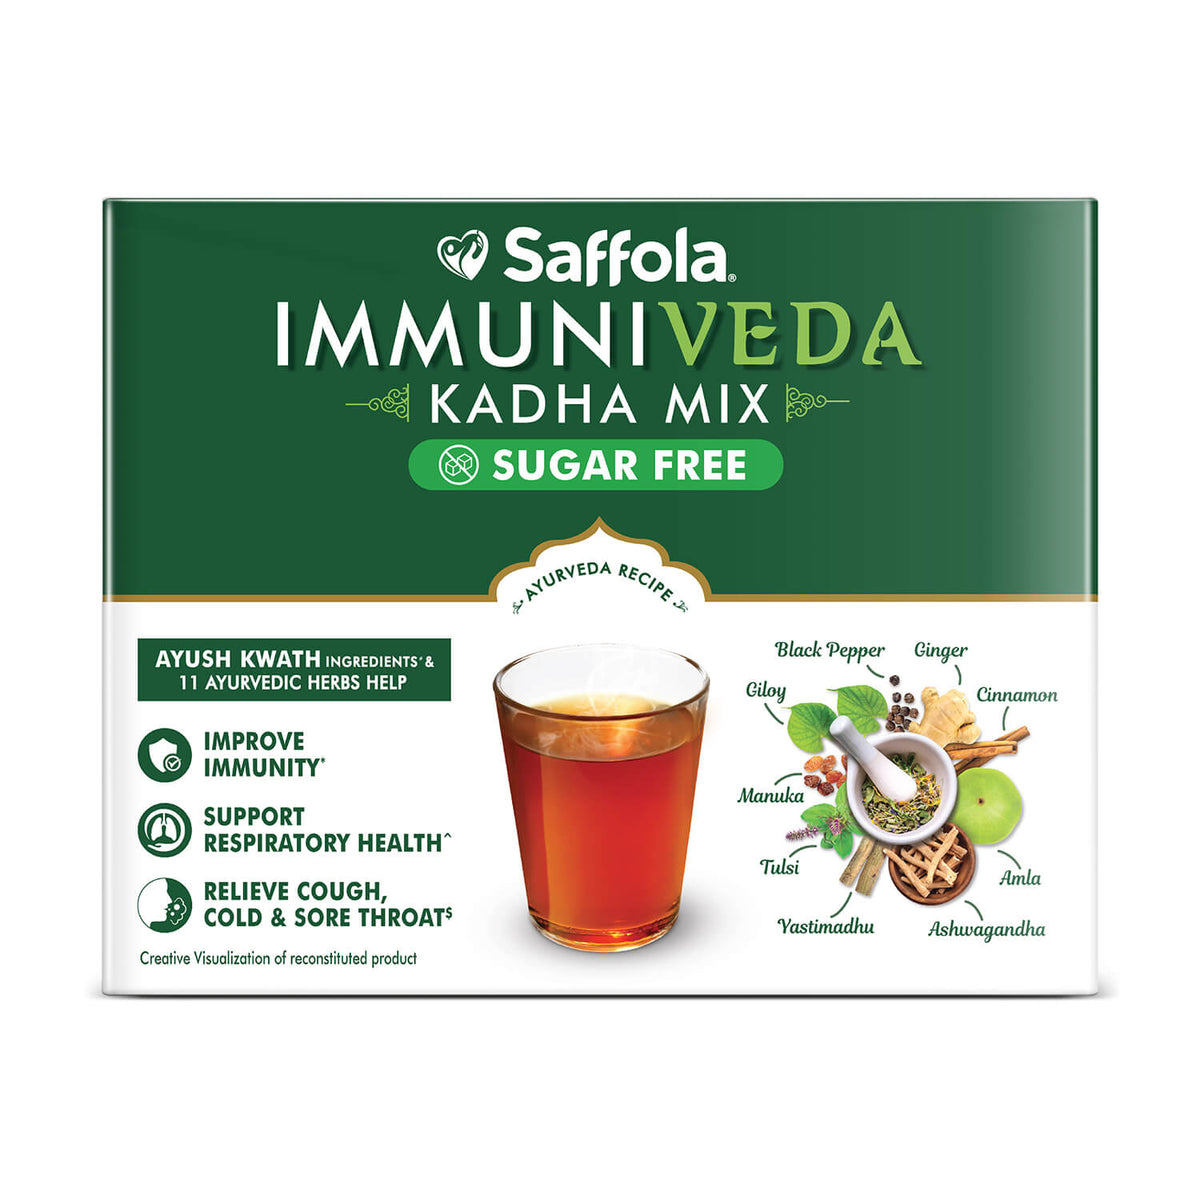 [CRED] Saffola Immuniveda Kadha Sugar Free 20 Sachets - 60g